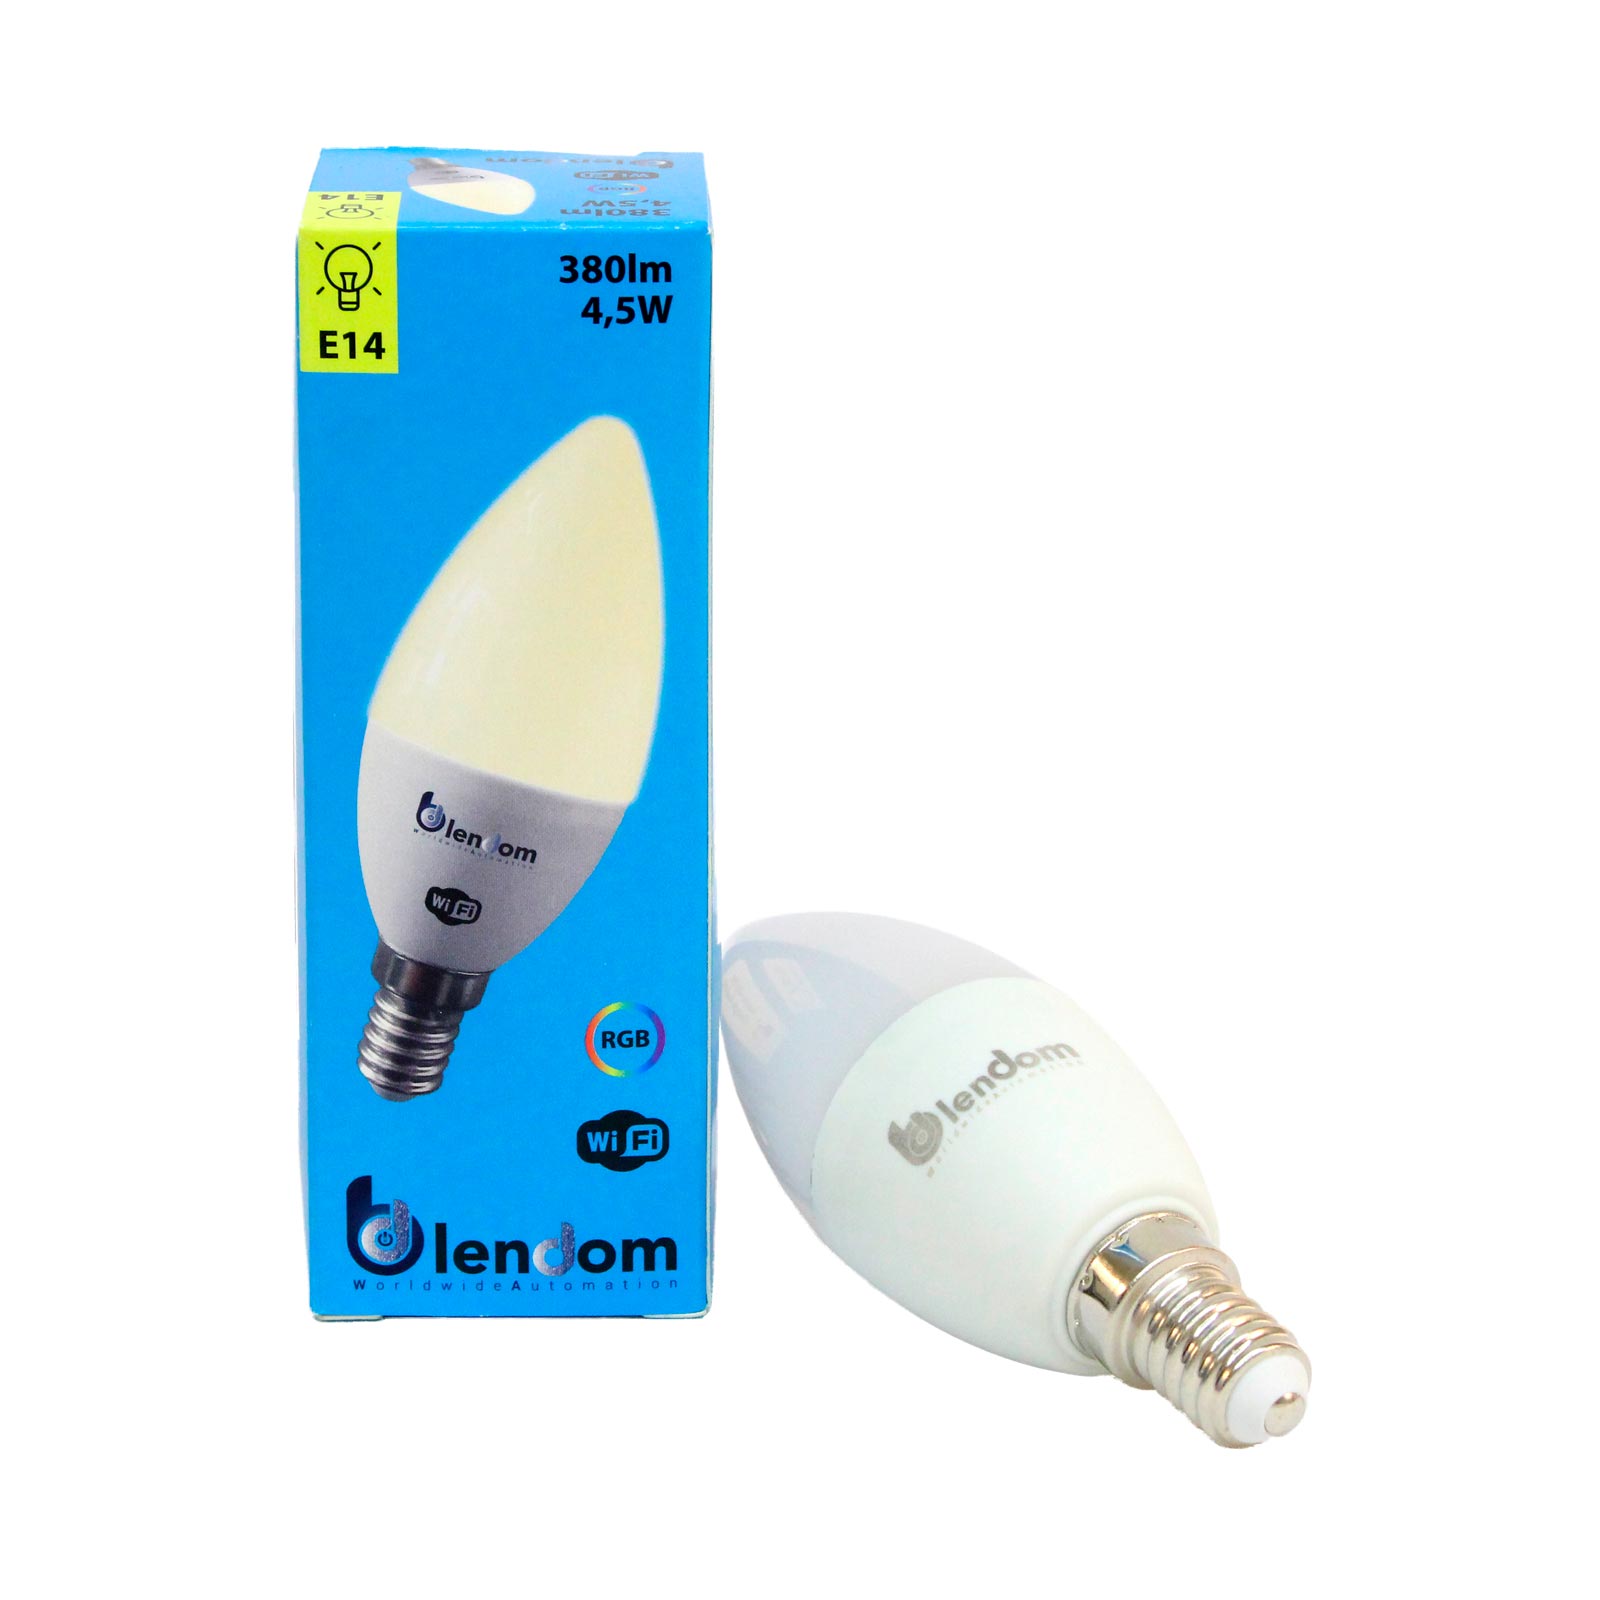 Smart Bulb base E14 - Blendom